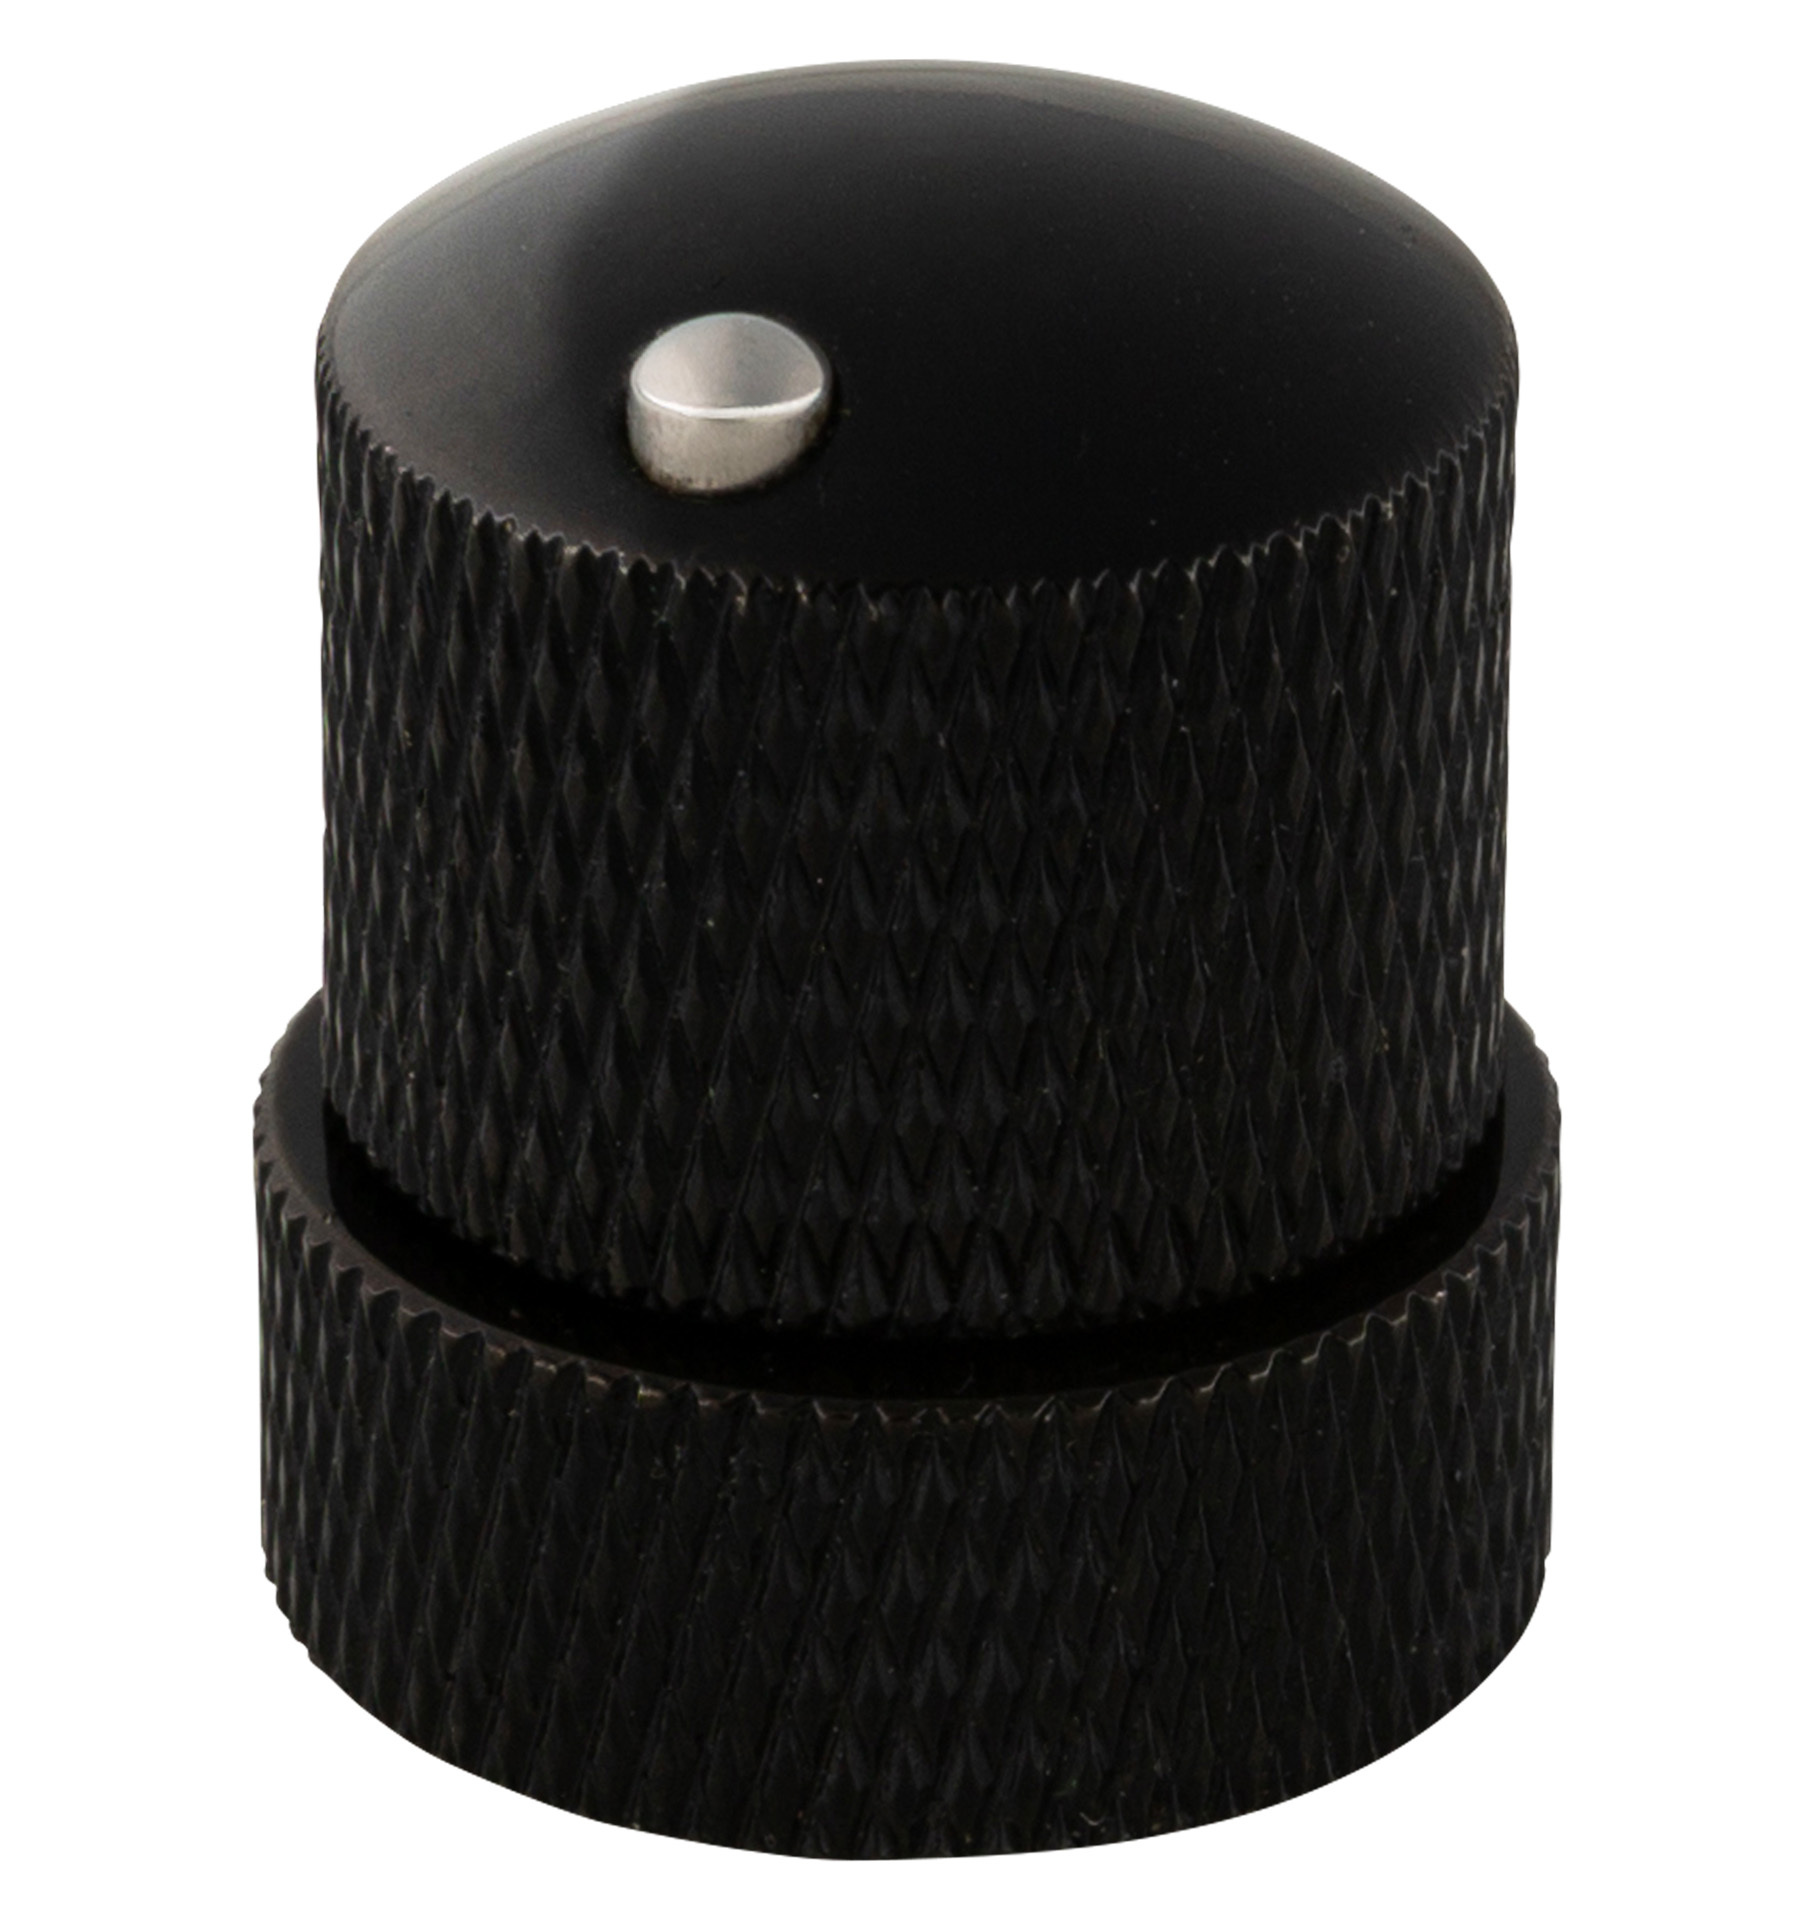 Framus & Warwick - Stacked Potentiometer Dome Knob with Convex Indicator - Black